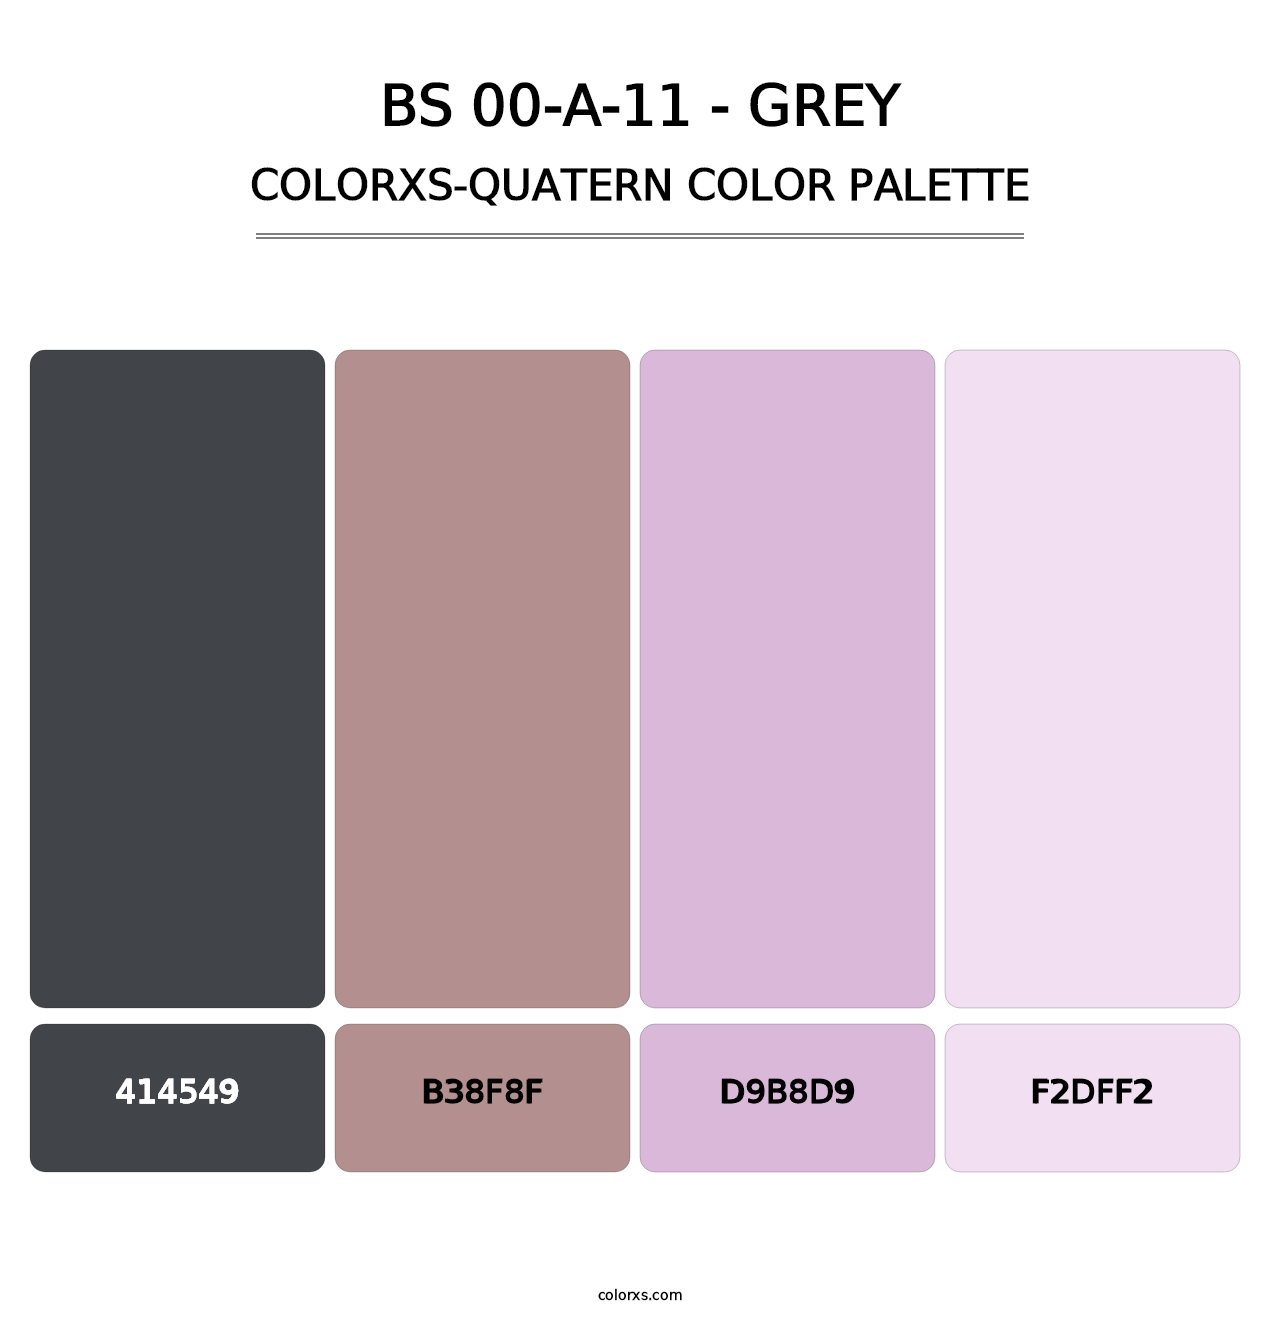 BS 00-A-11 - Grey - Colorxs Quatern Palette